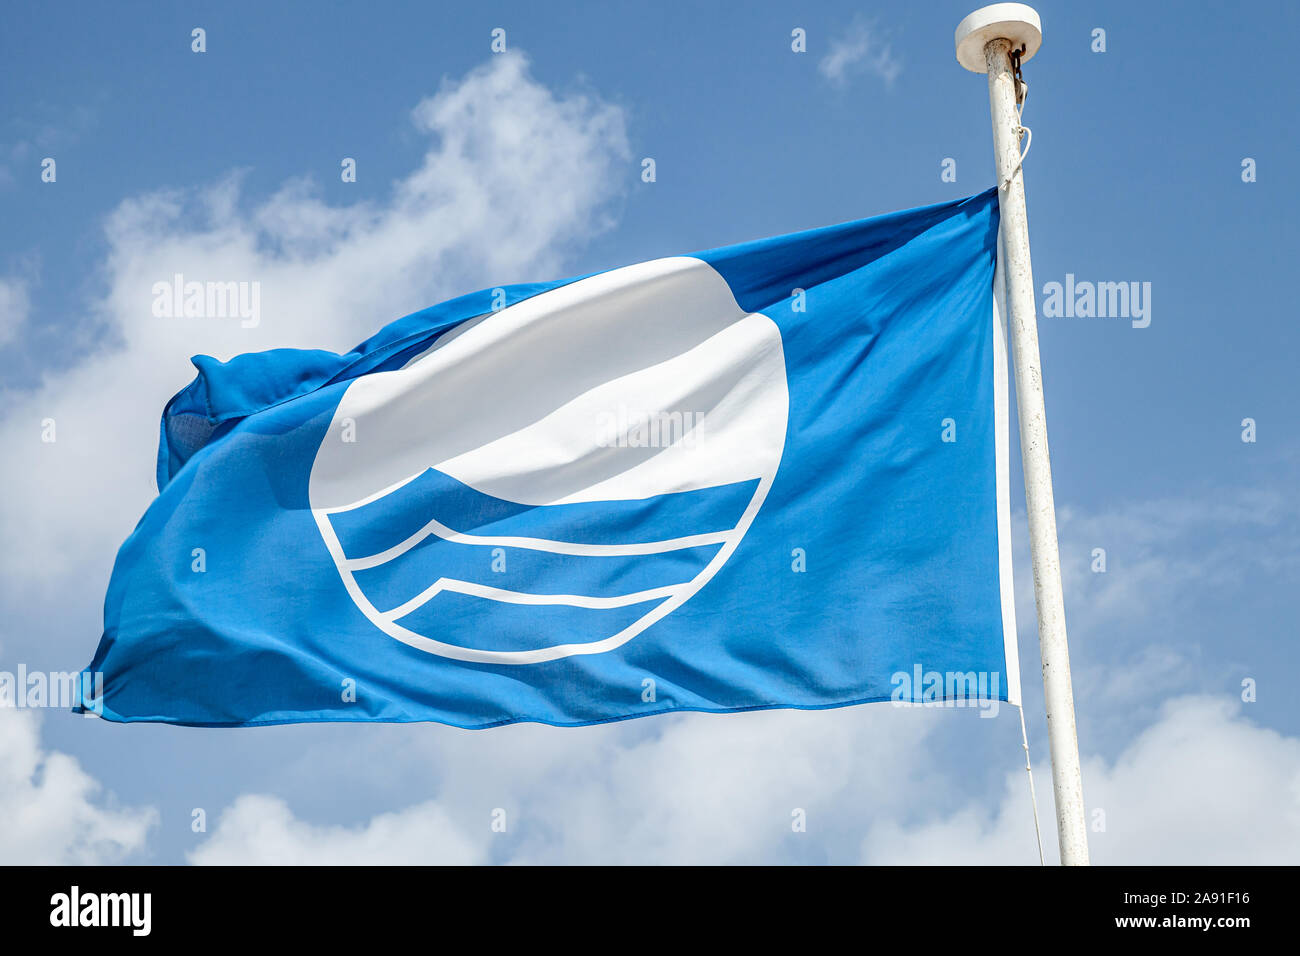 Blue Flag beach. Close-up photo of a flag waving under blue cloudy sky Stock Photo